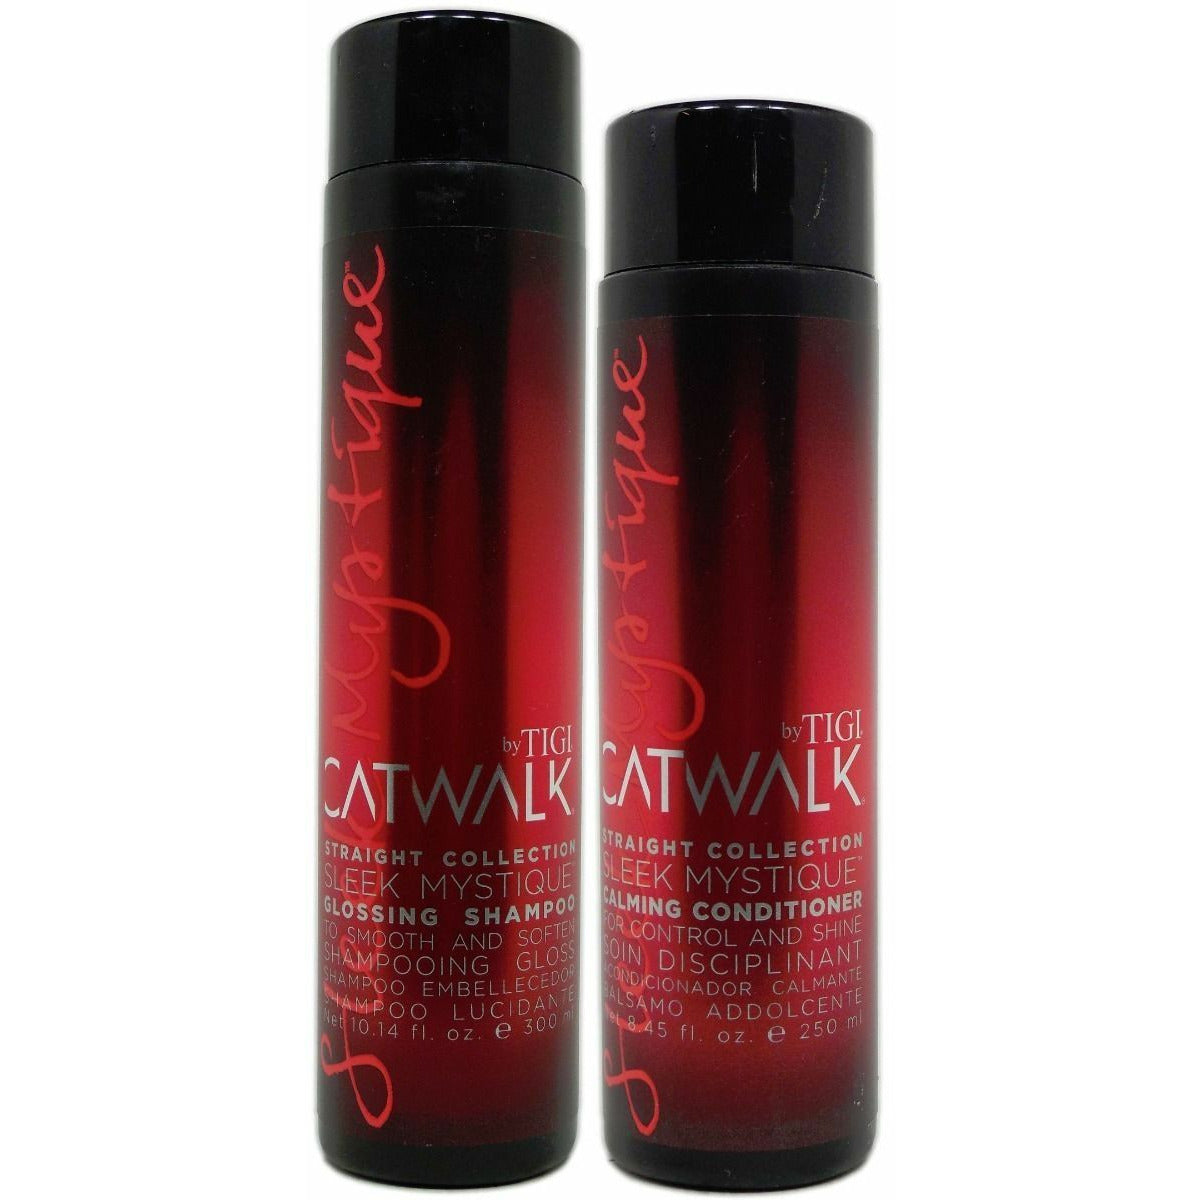 Tigi Catwalk Straight Collection Mystique - Glossing Shampoo 10.14oz & – Hair Care Beauty